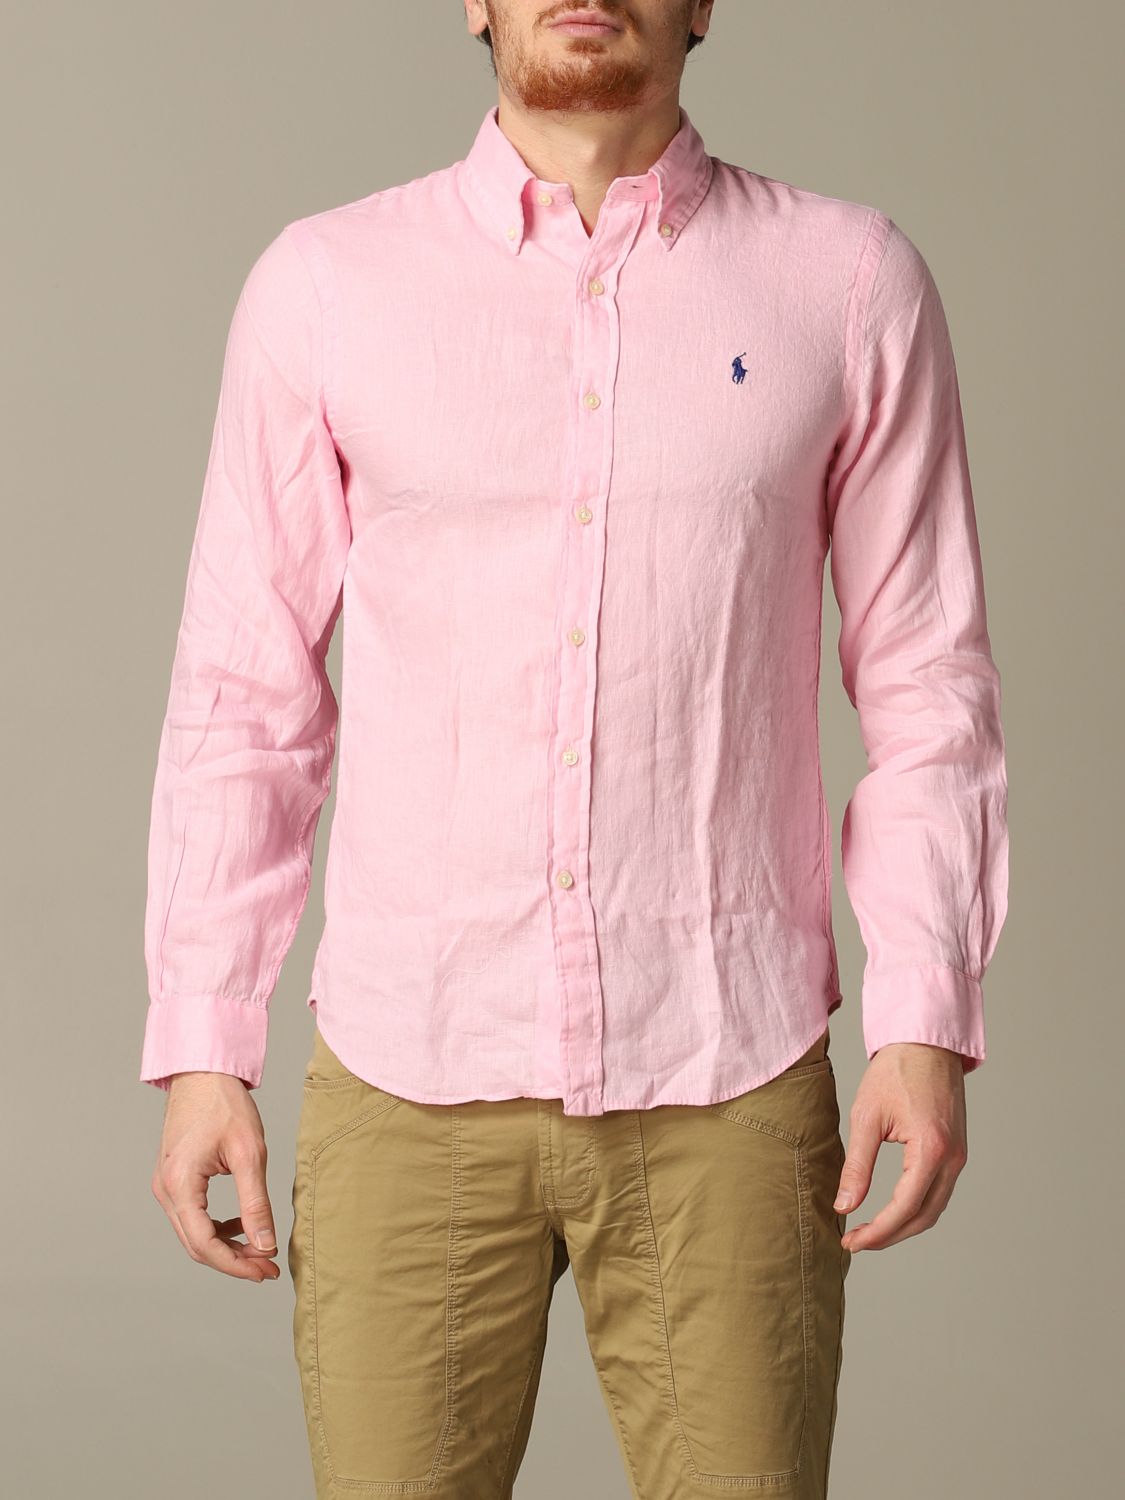 Polo Ralph Lauren linen shirt with button-down collar | Shirt Polo ...